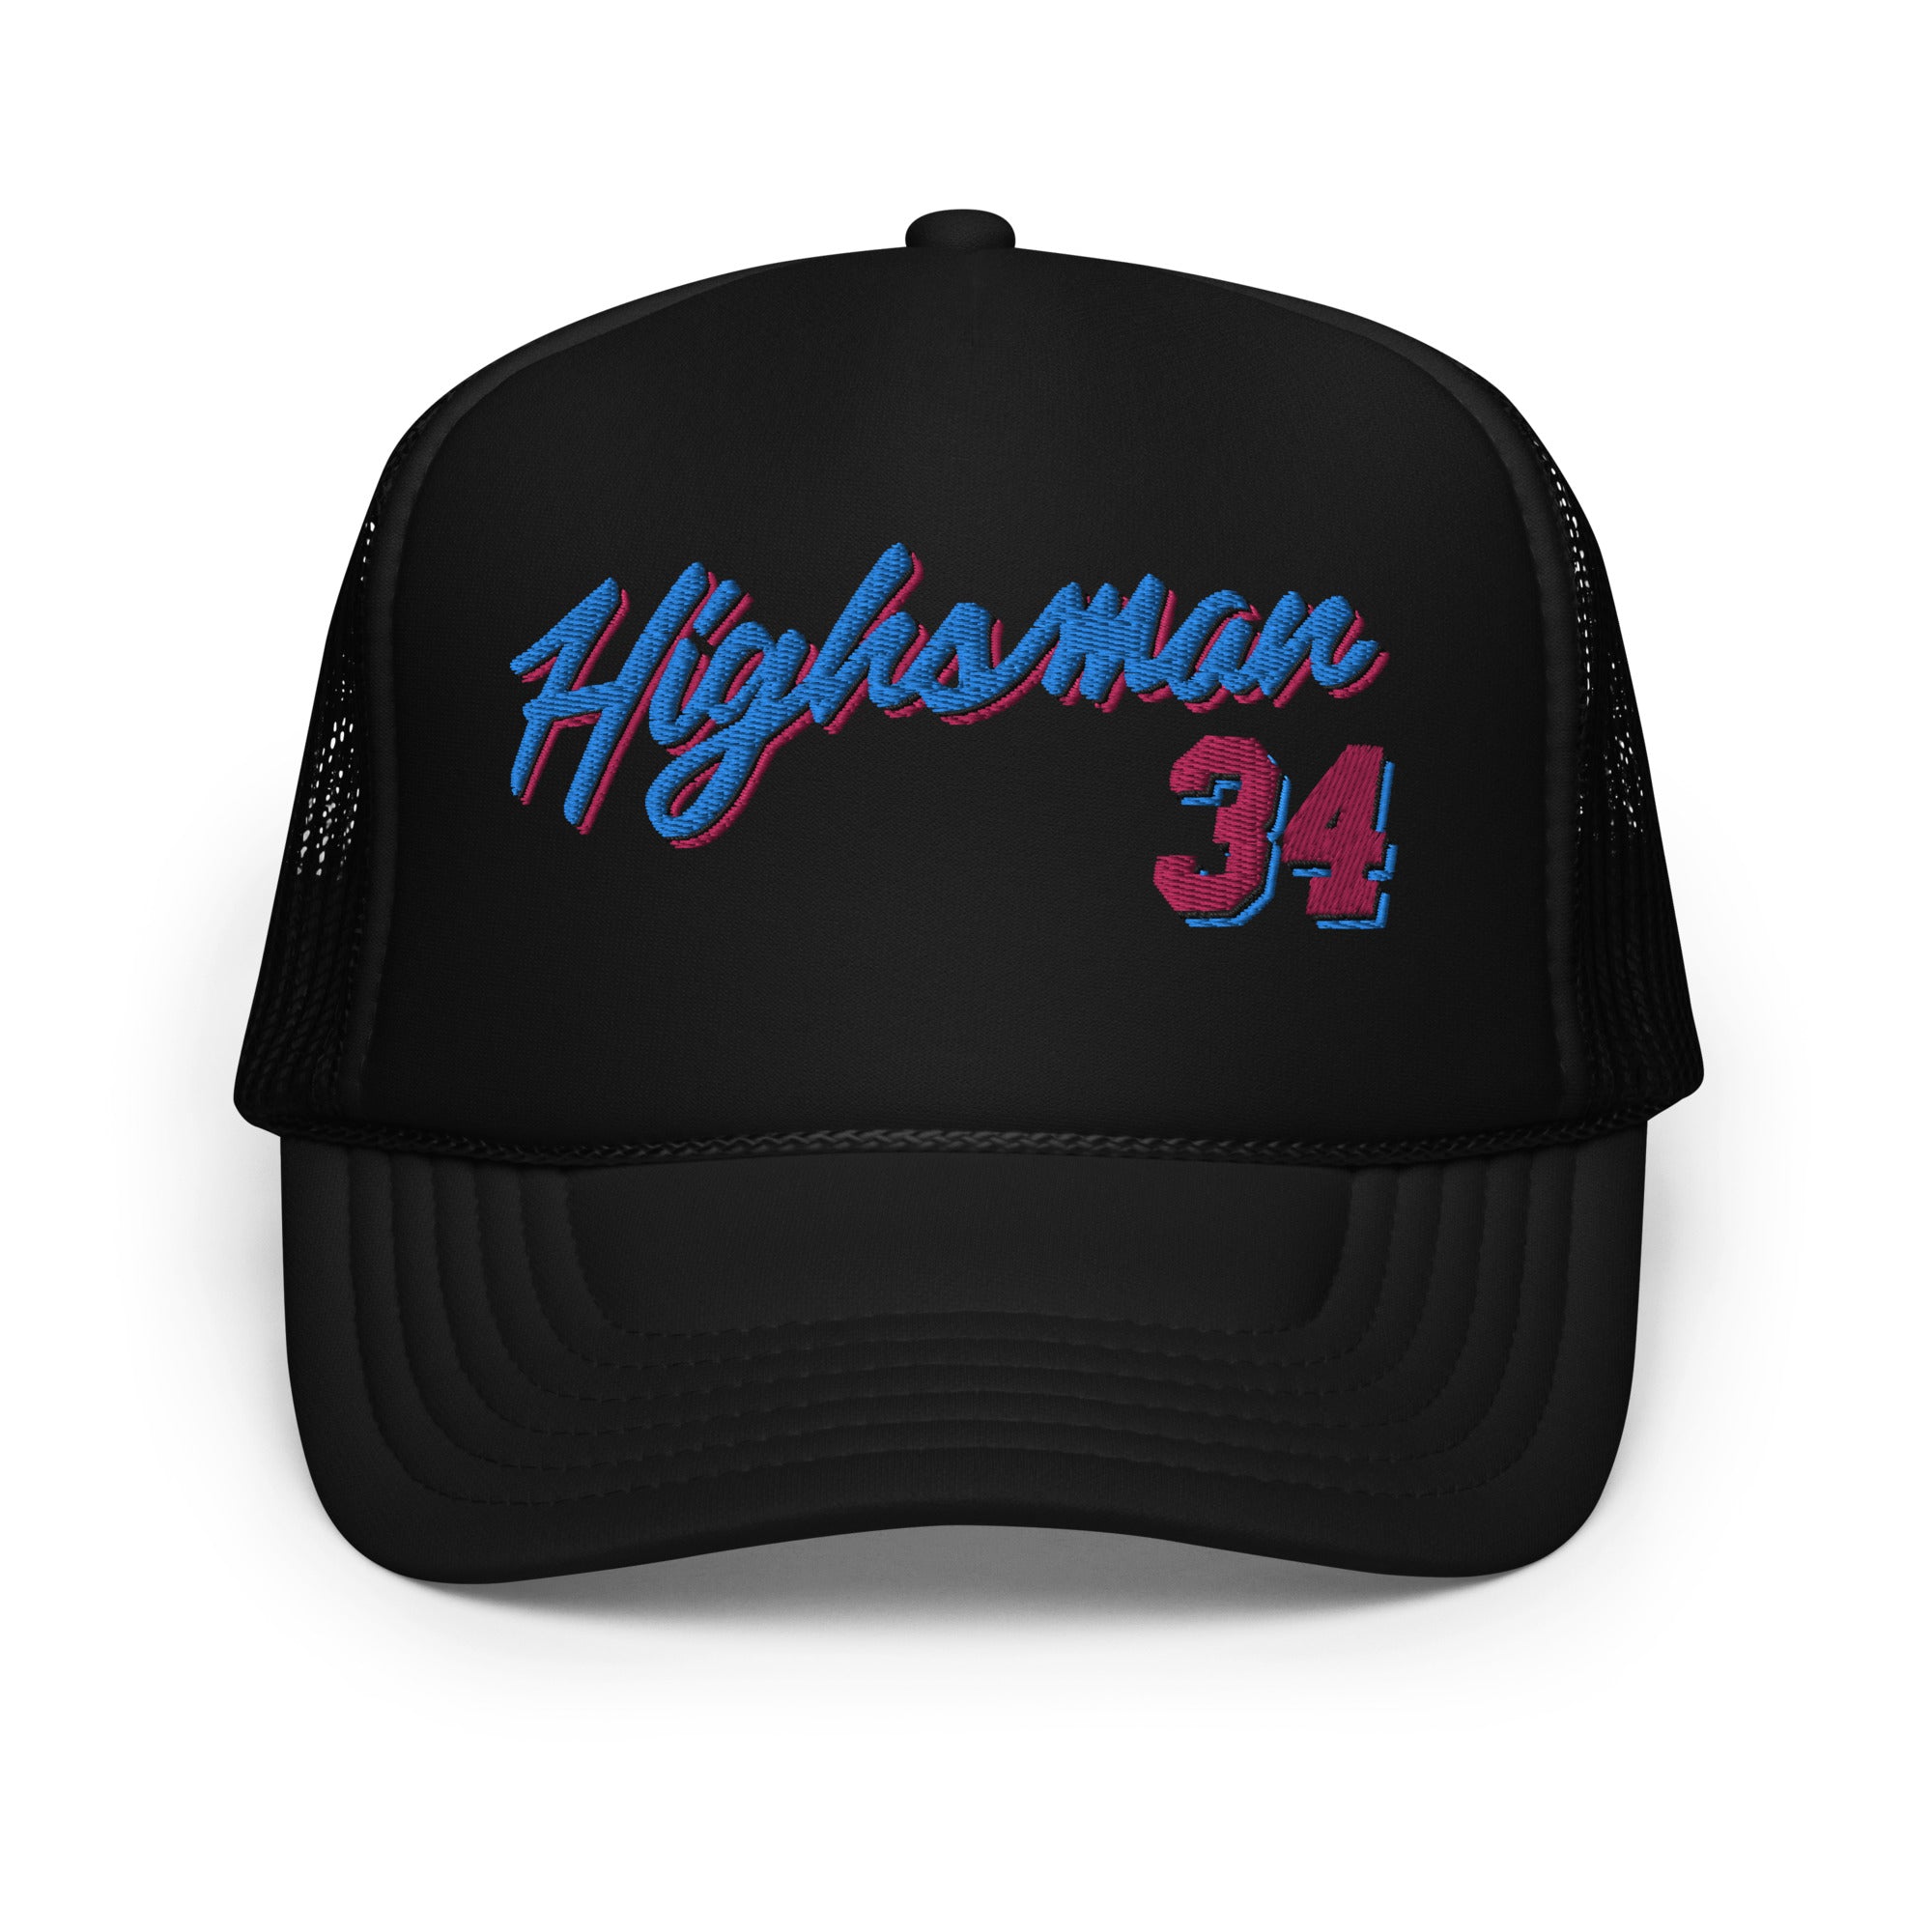 Highsman Miami Vice Trucker Hat